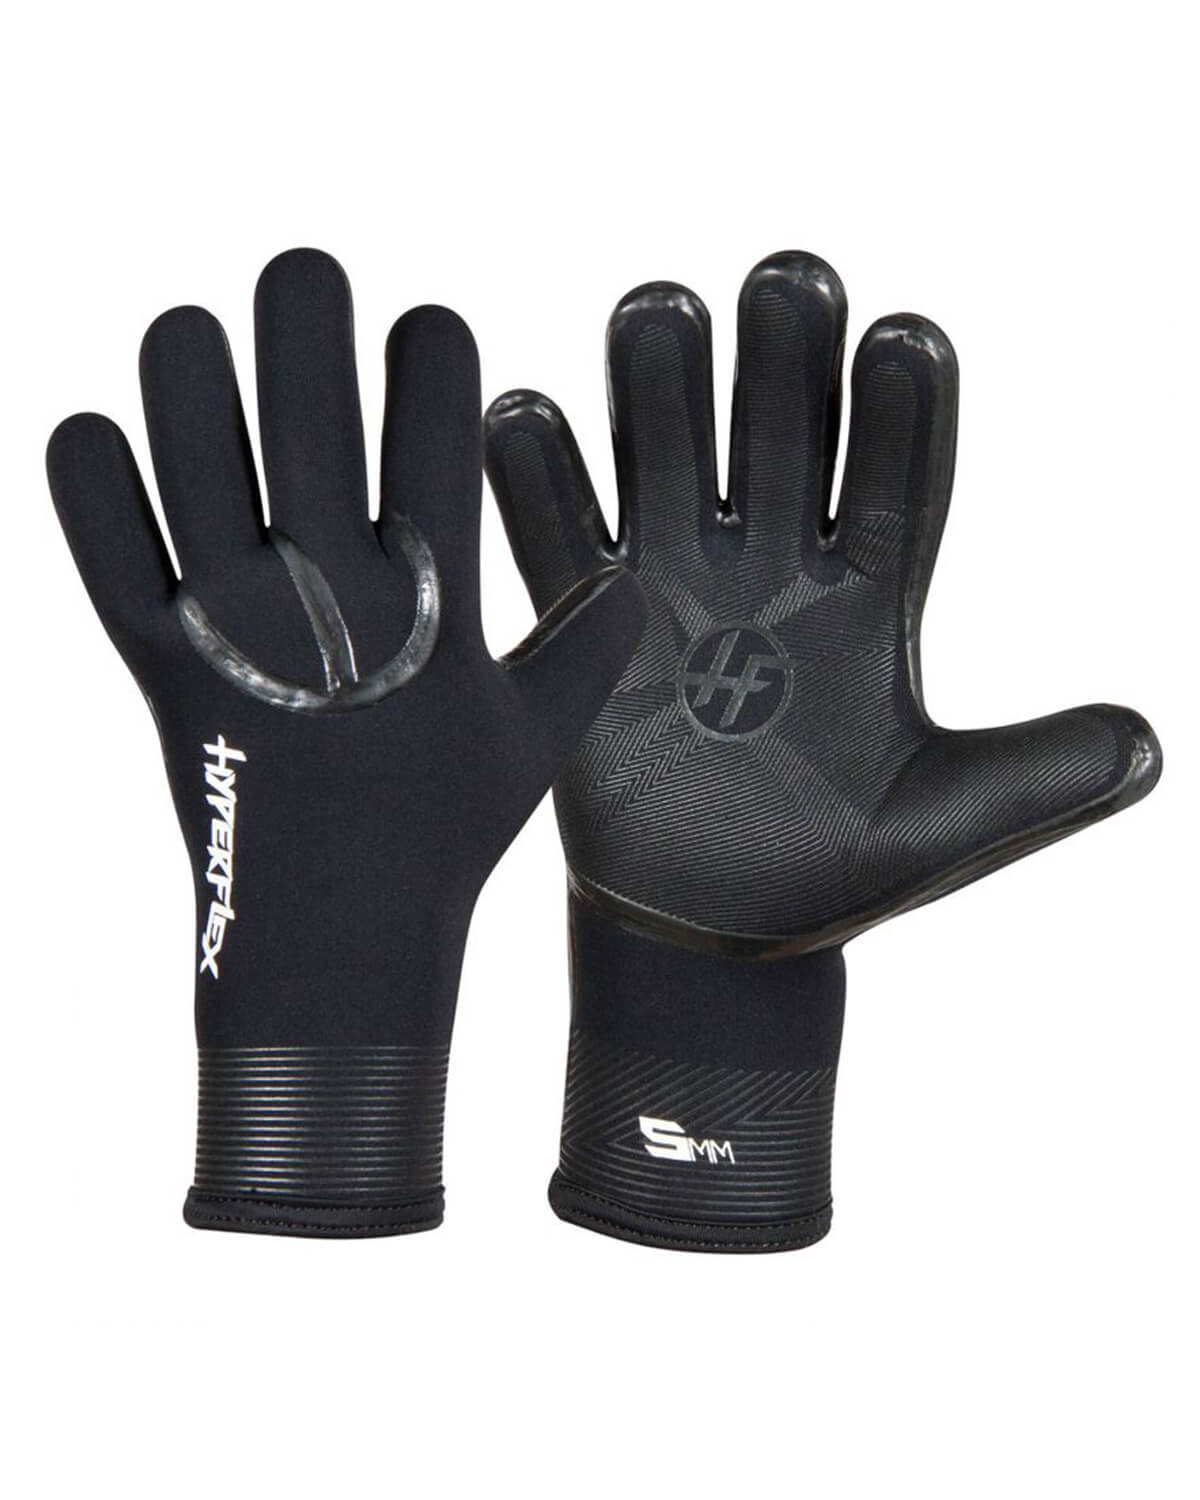 5mm HyperFlex PRO Wetsuit Gloves